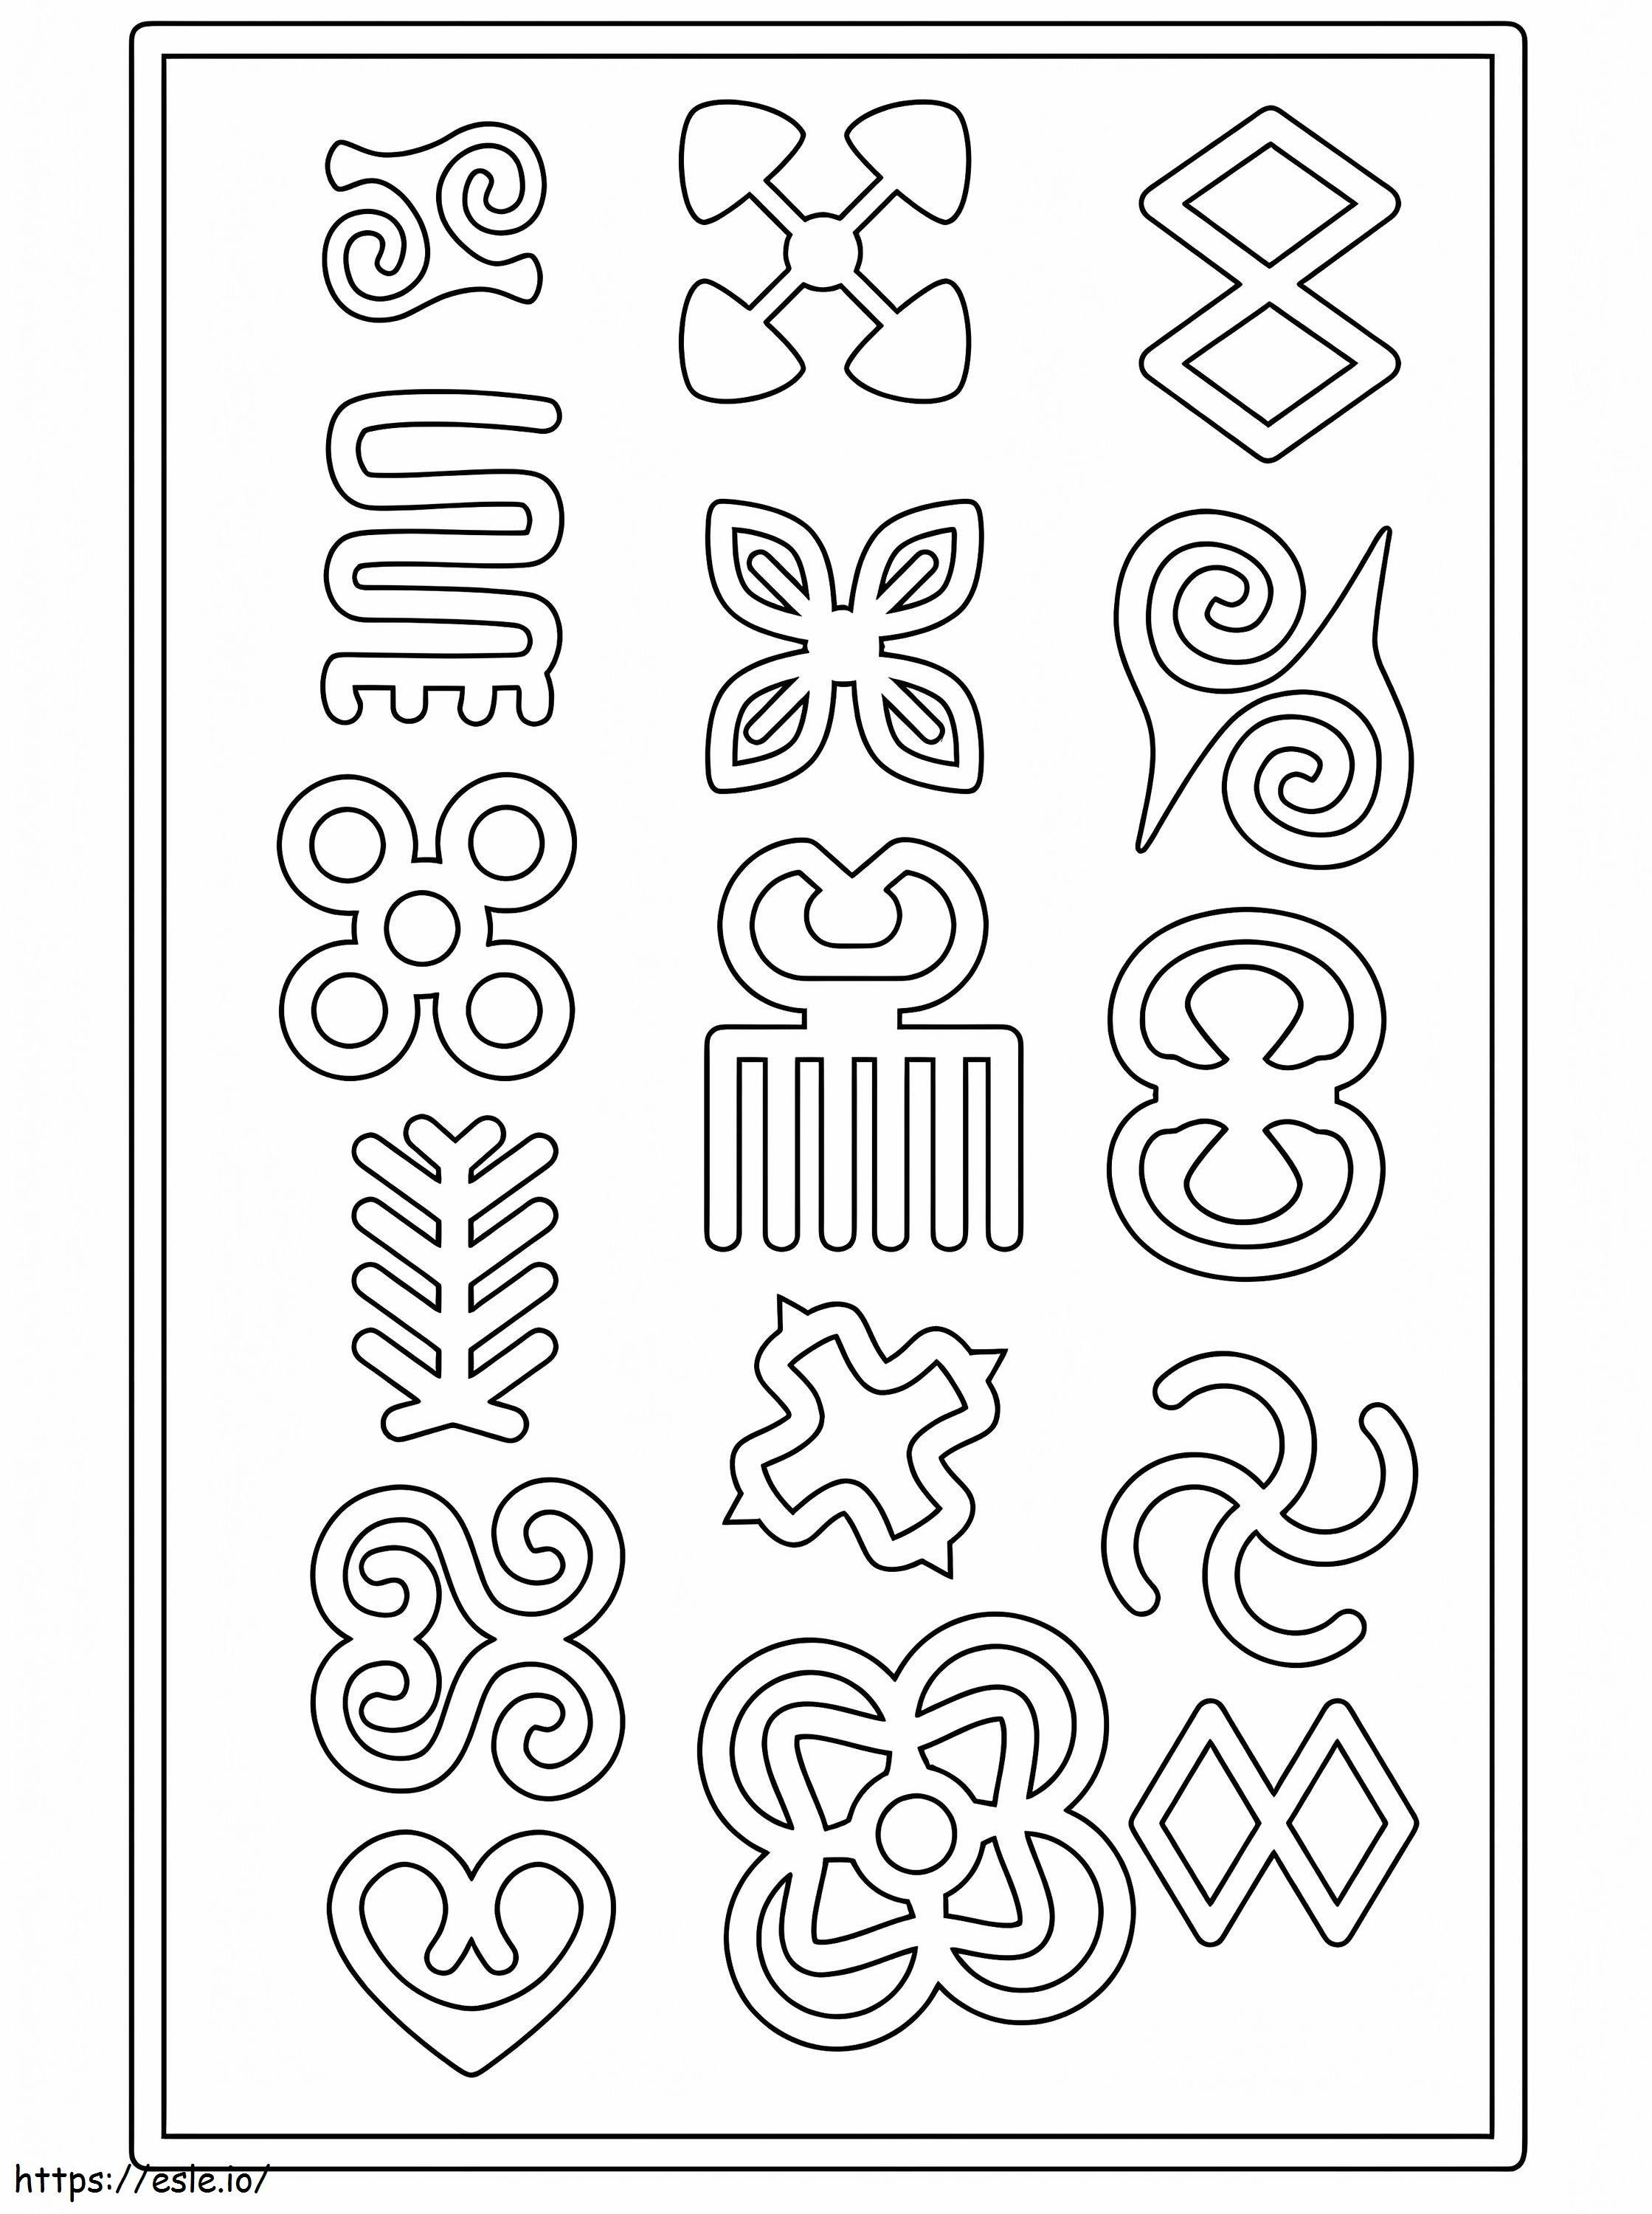 Adinkra-Symbole ausmalbilder